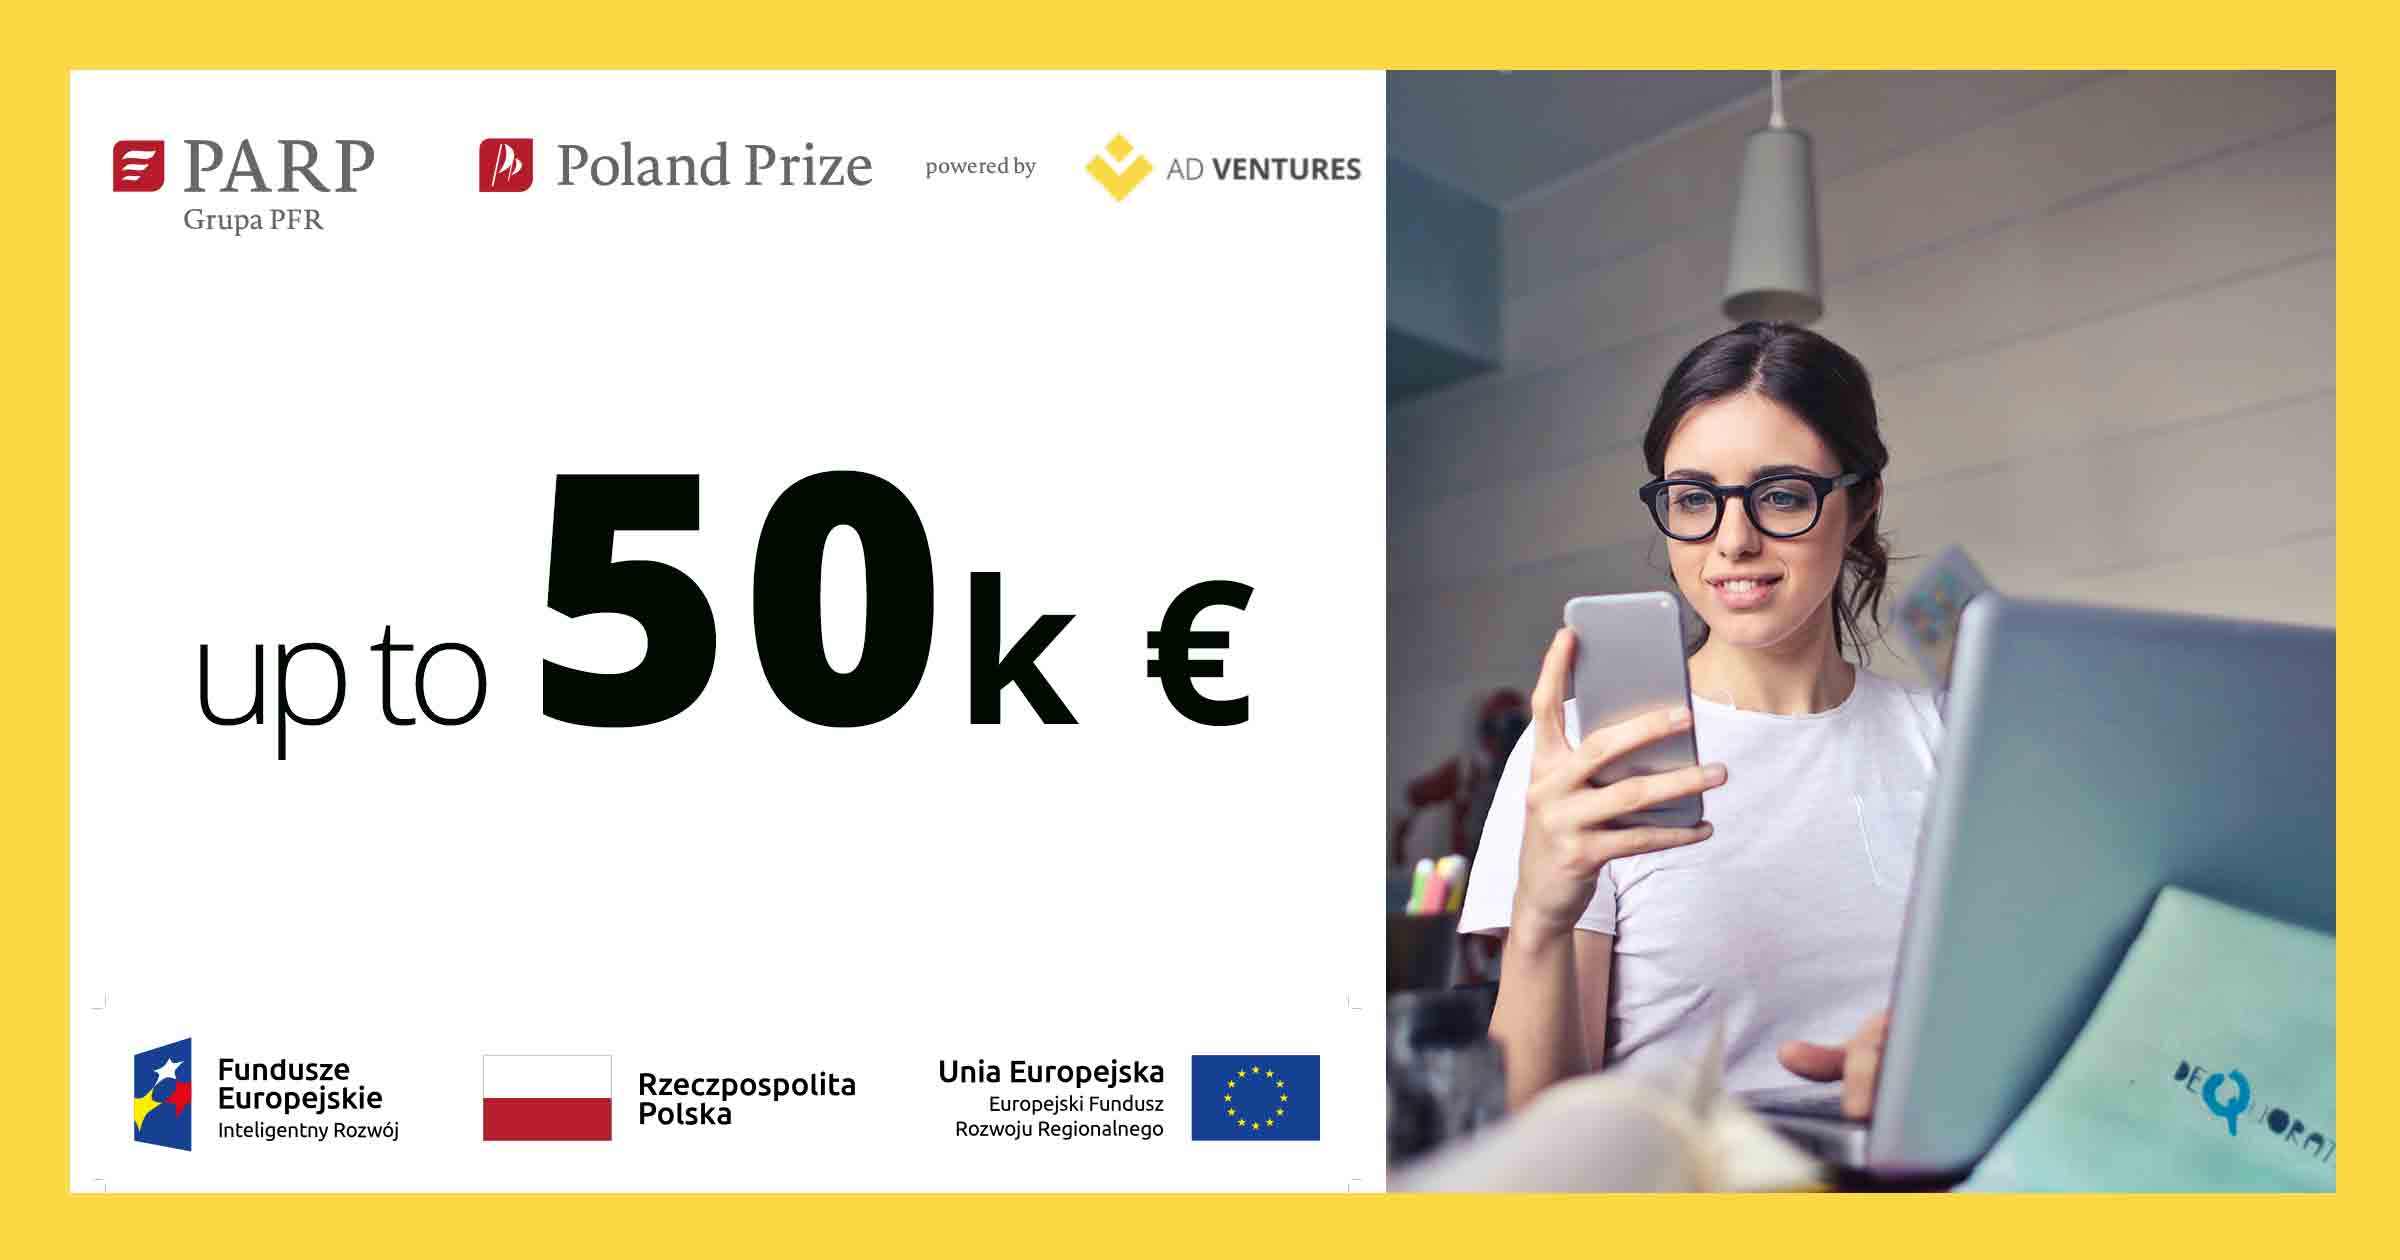 Ad Ventures - Poland Prize